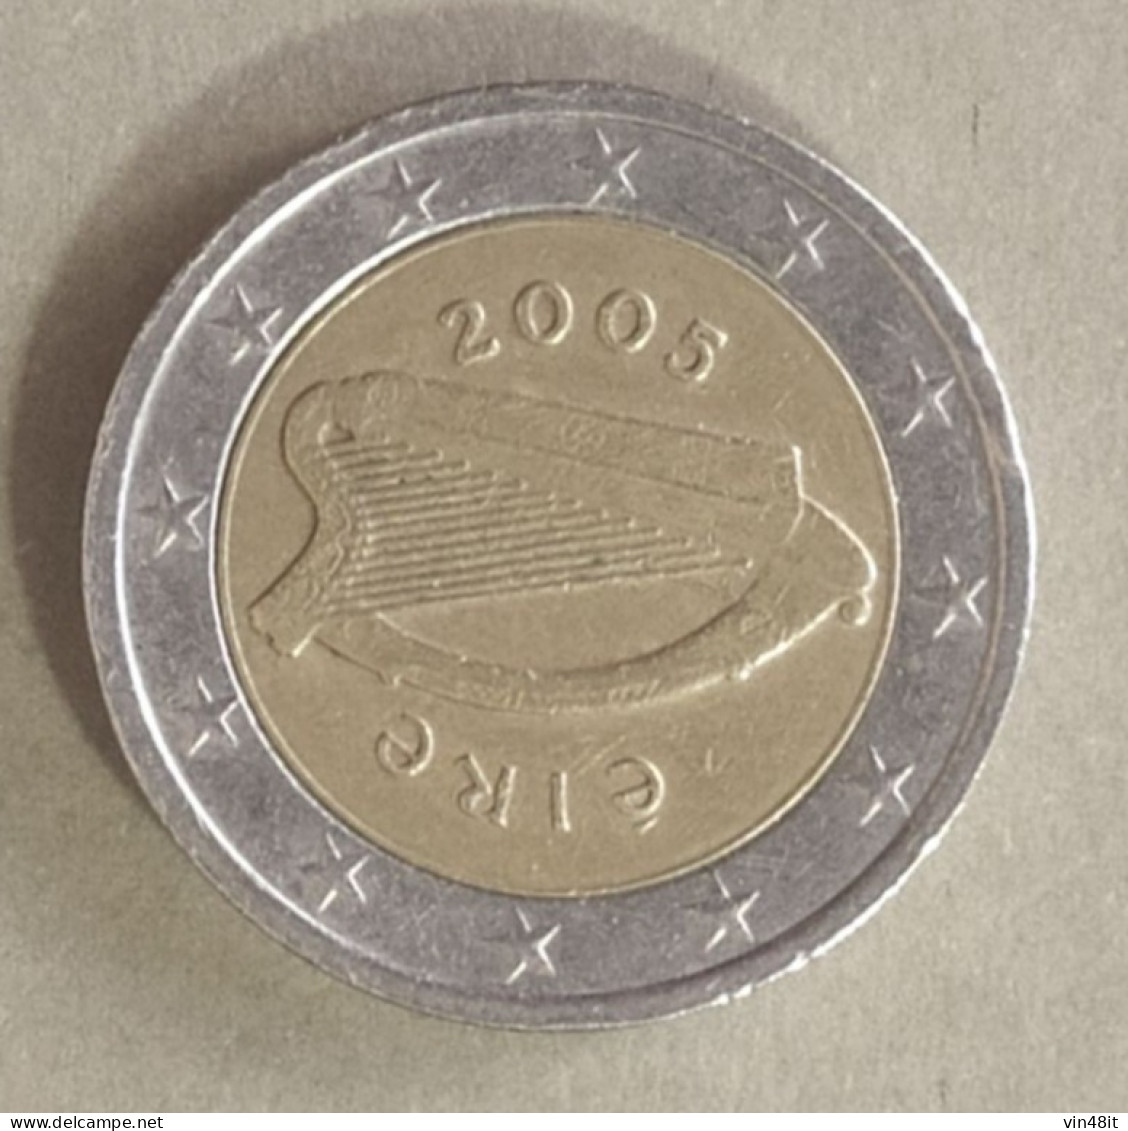 2005 - IRLANDA  - MONETA IN EURO - DEL VALORE DI  2,00  EURO  - USATA - Ierland